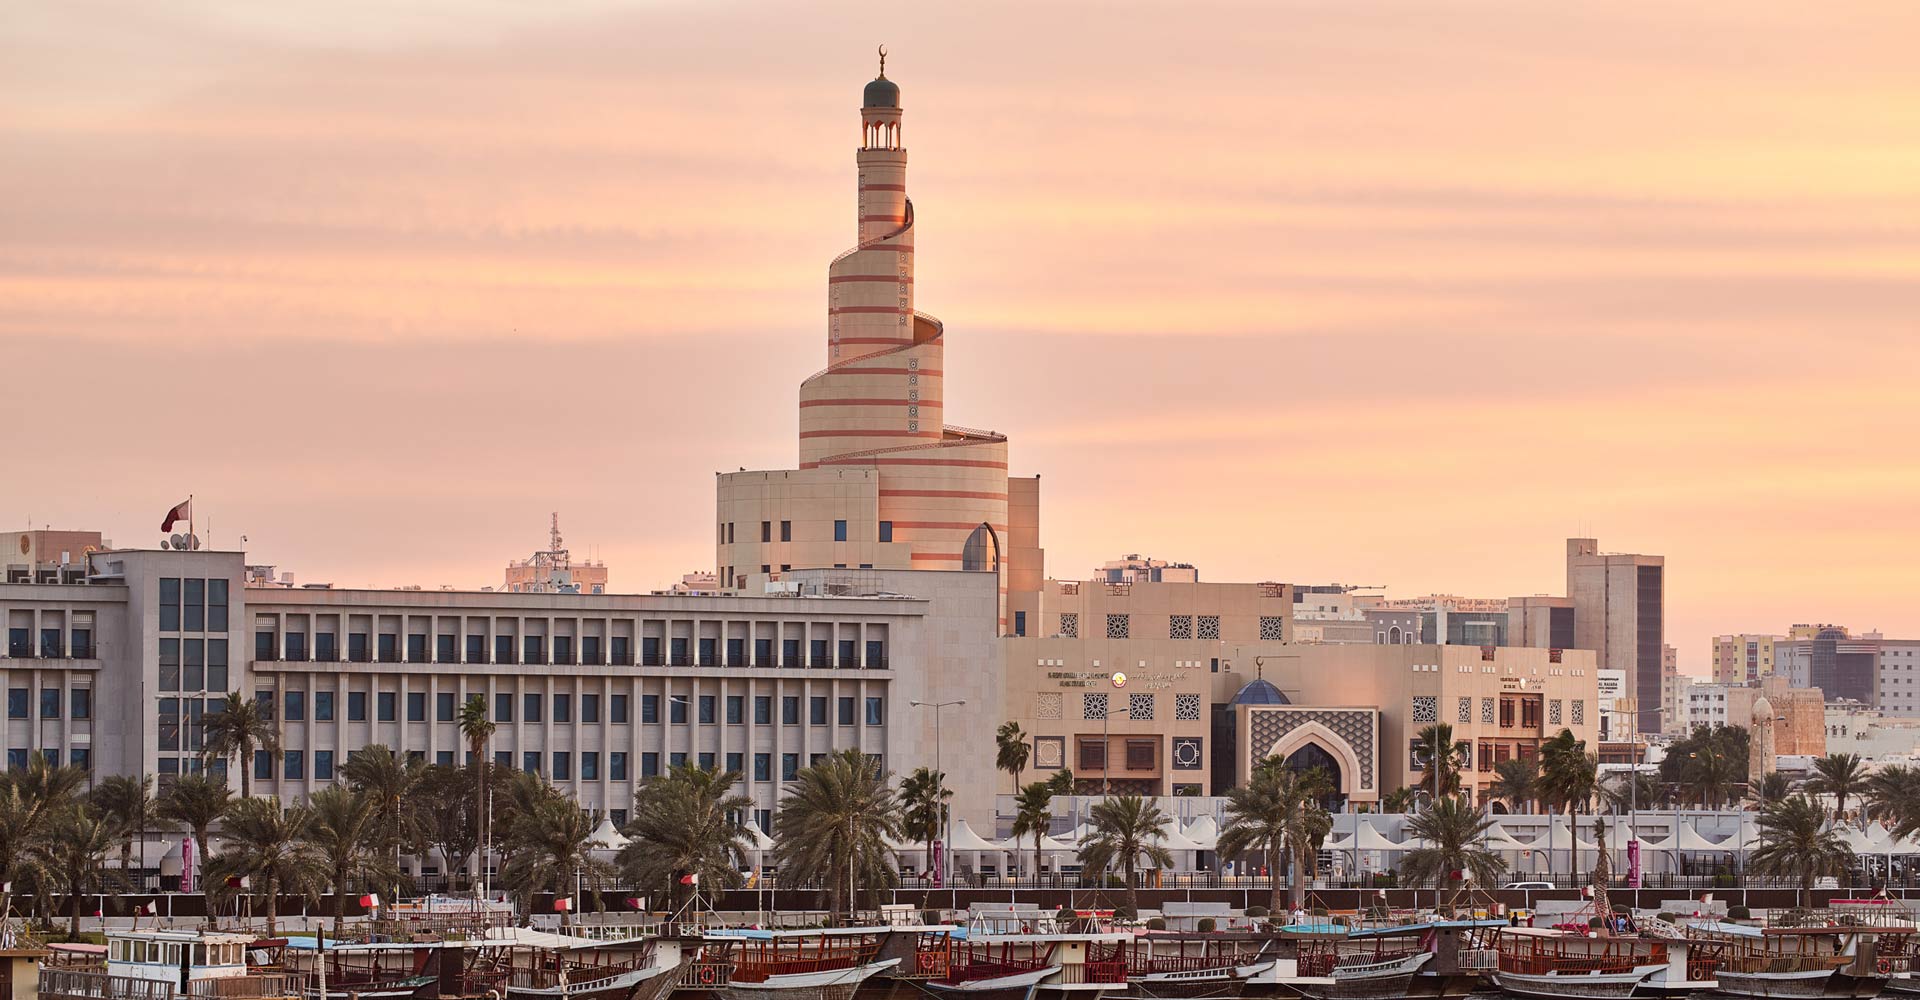 Qatar Tourism announces refurbishment of 25 dhow boats